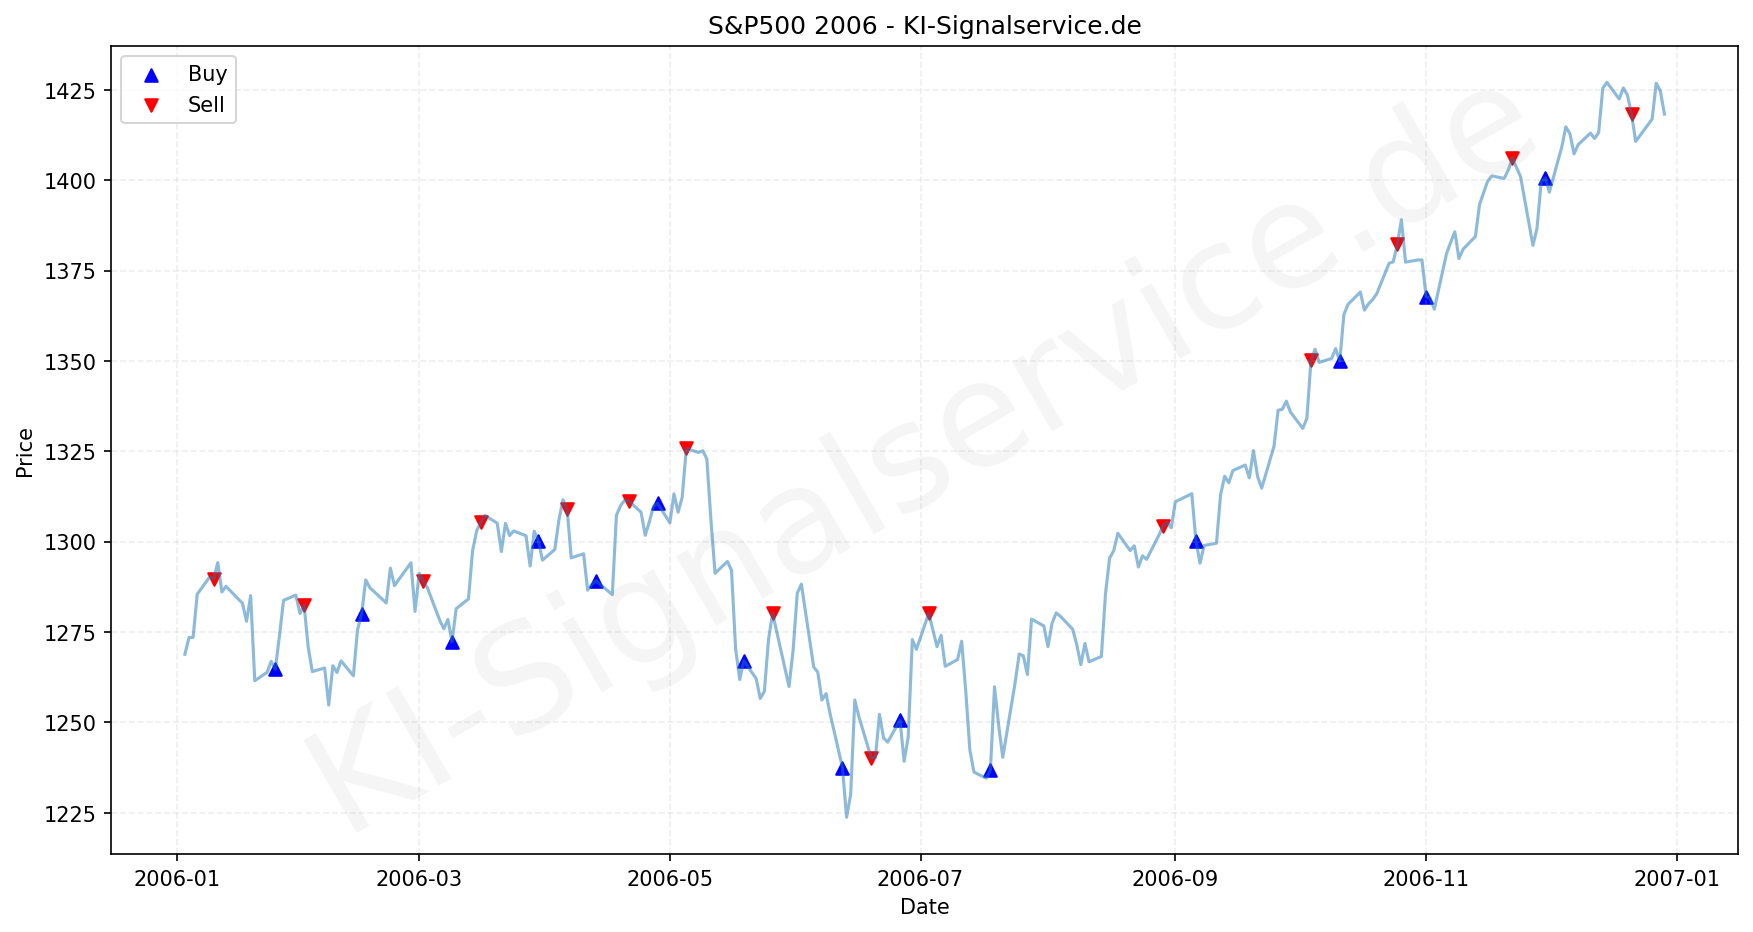 SP500 Index Performance Chart - KI Tradingsignale 2006